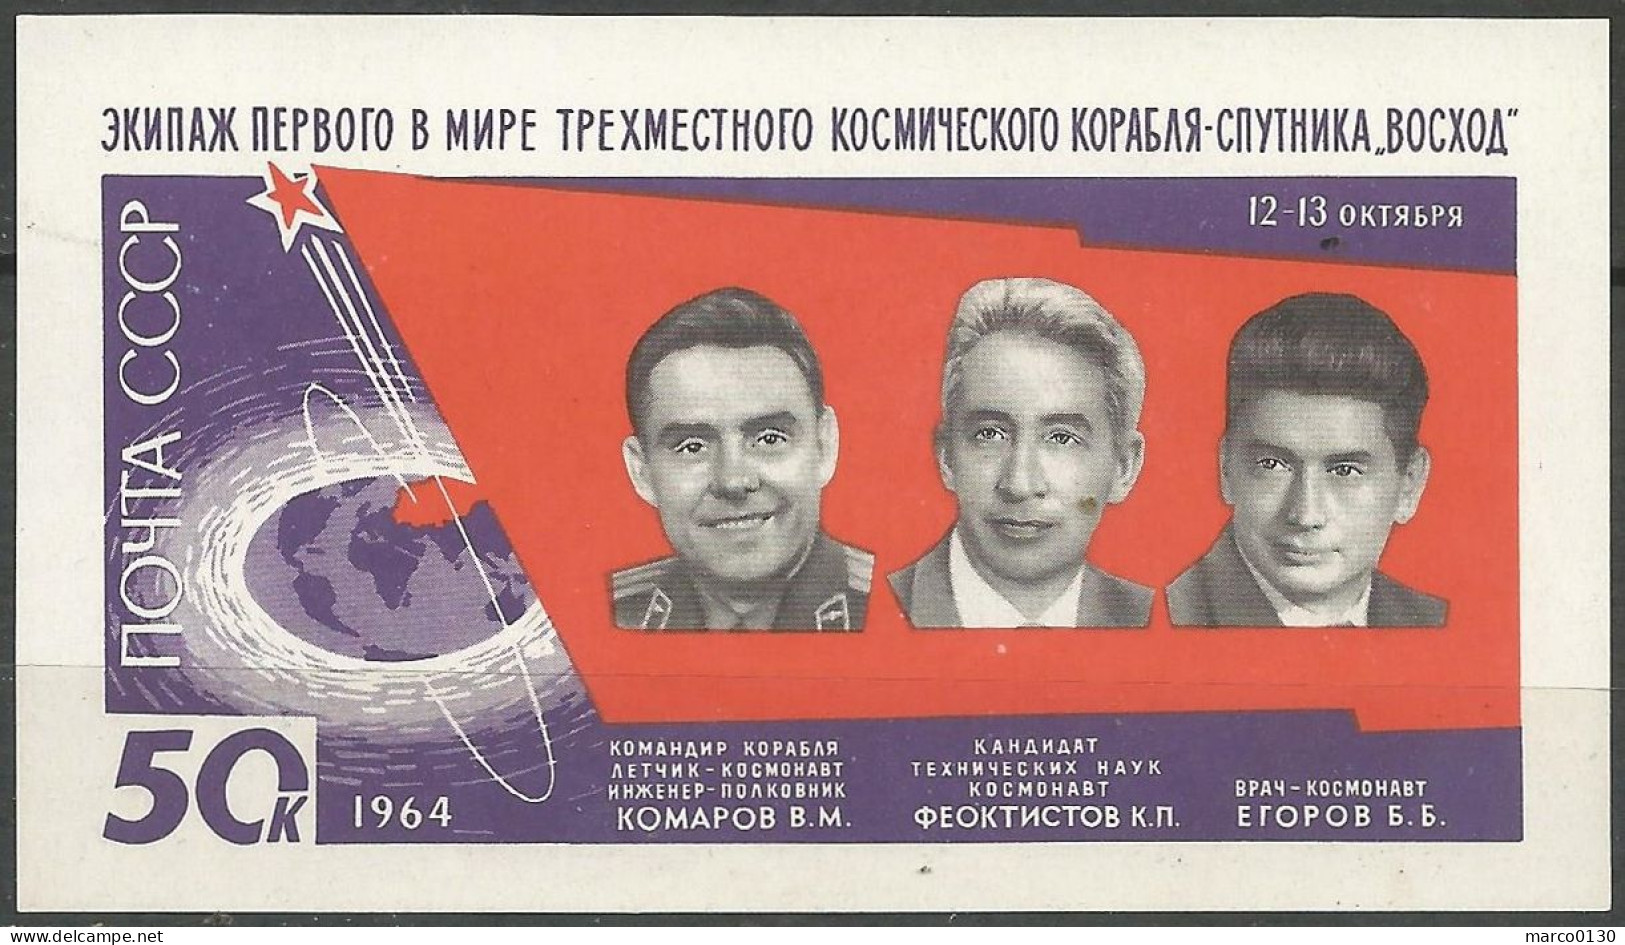 RUSSIE N° 2879 NON DENTELE NEUF - Unused Stamps